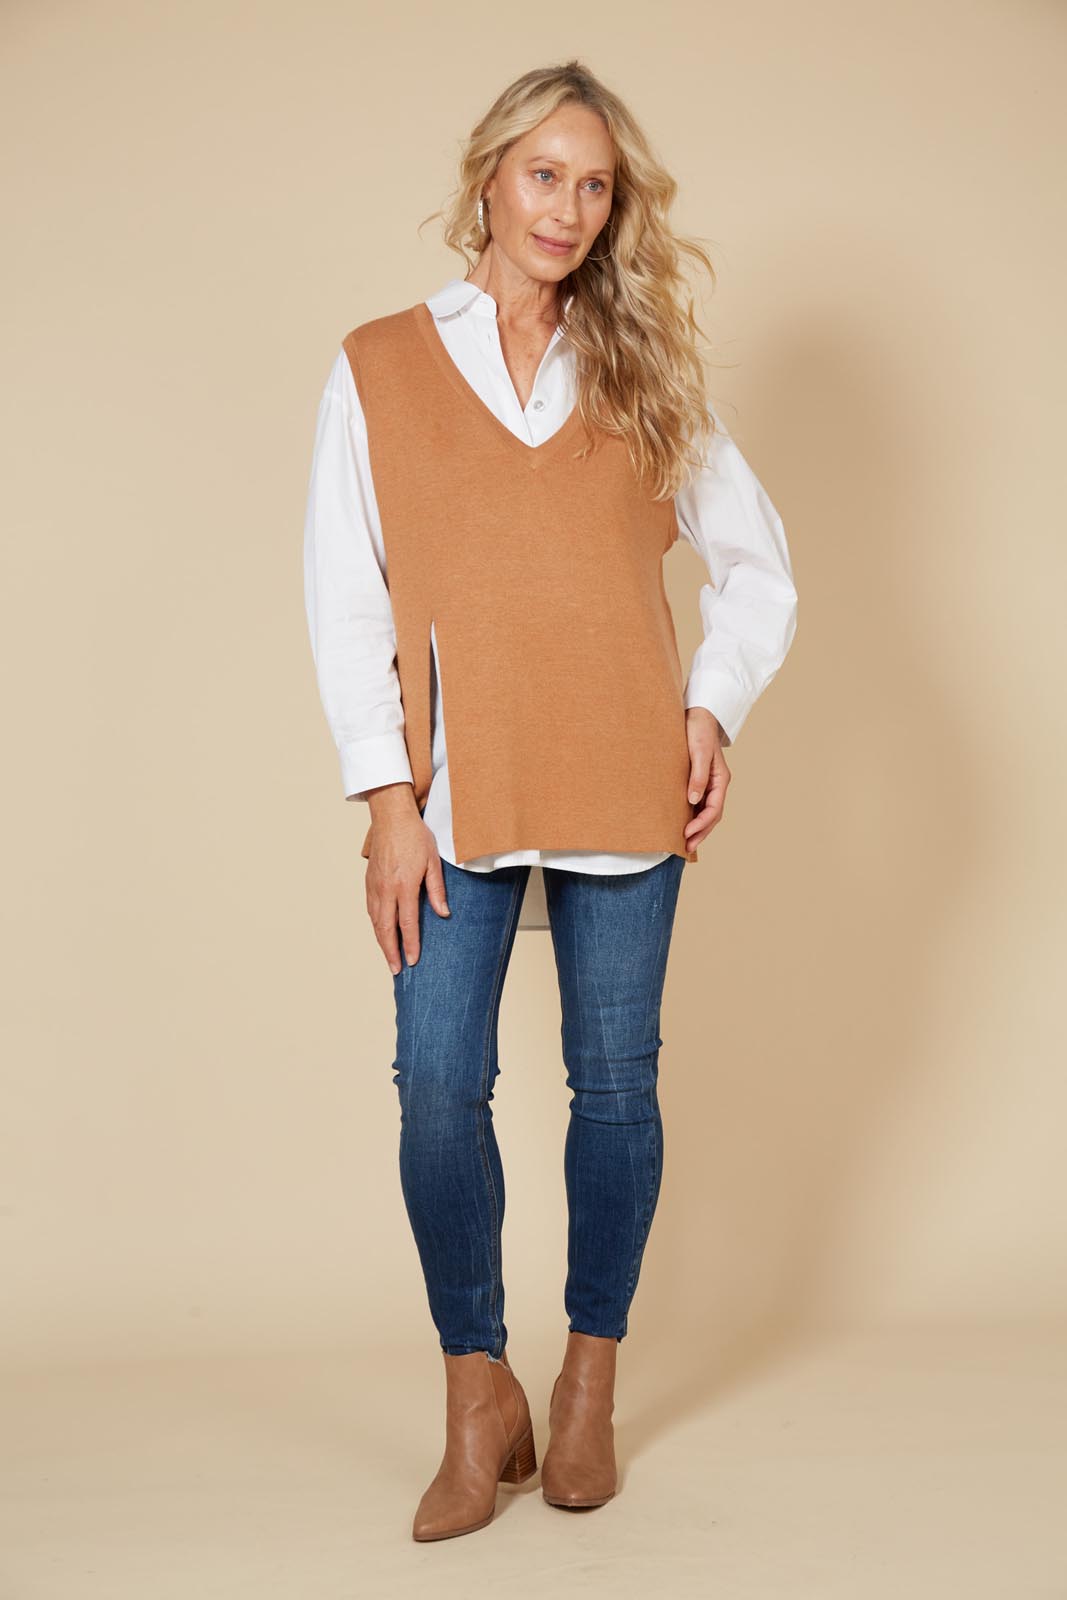 Cleo Vest - Caramel - eb&ive Clothing - Knit Vest